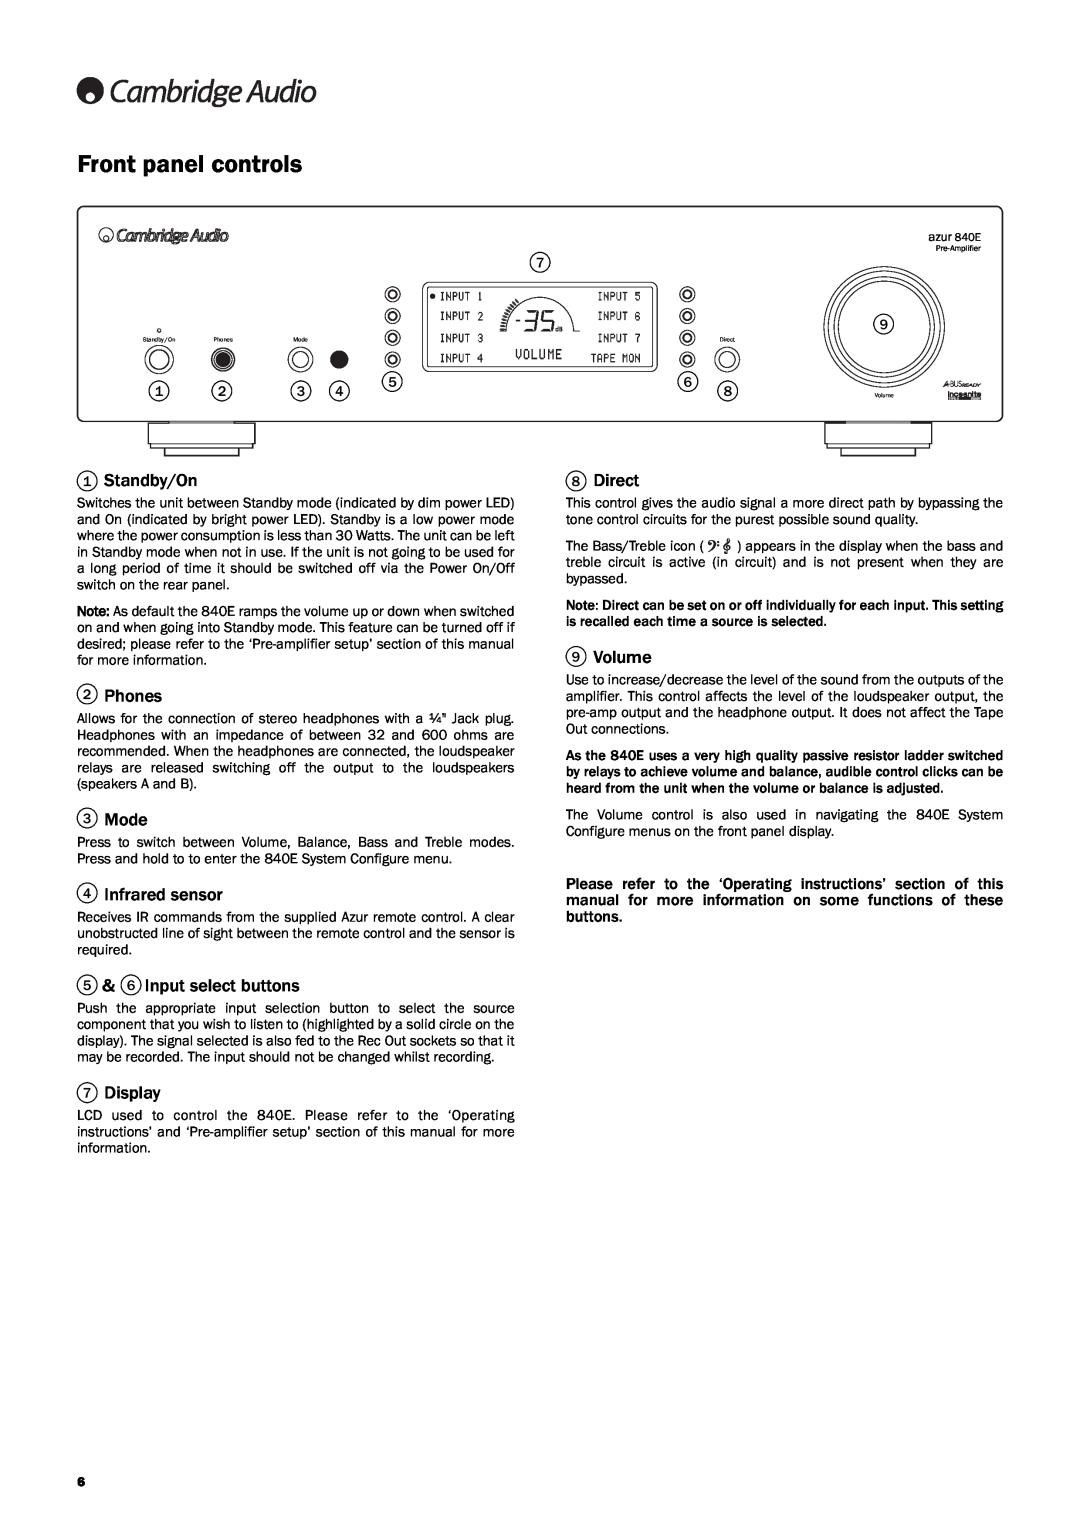 Cambridge Audio Azur 840E Front panel controls, Standby/On, Direct, 2Phones, 3Mode, 9Volume, 4Infrared sensor, 7Display 